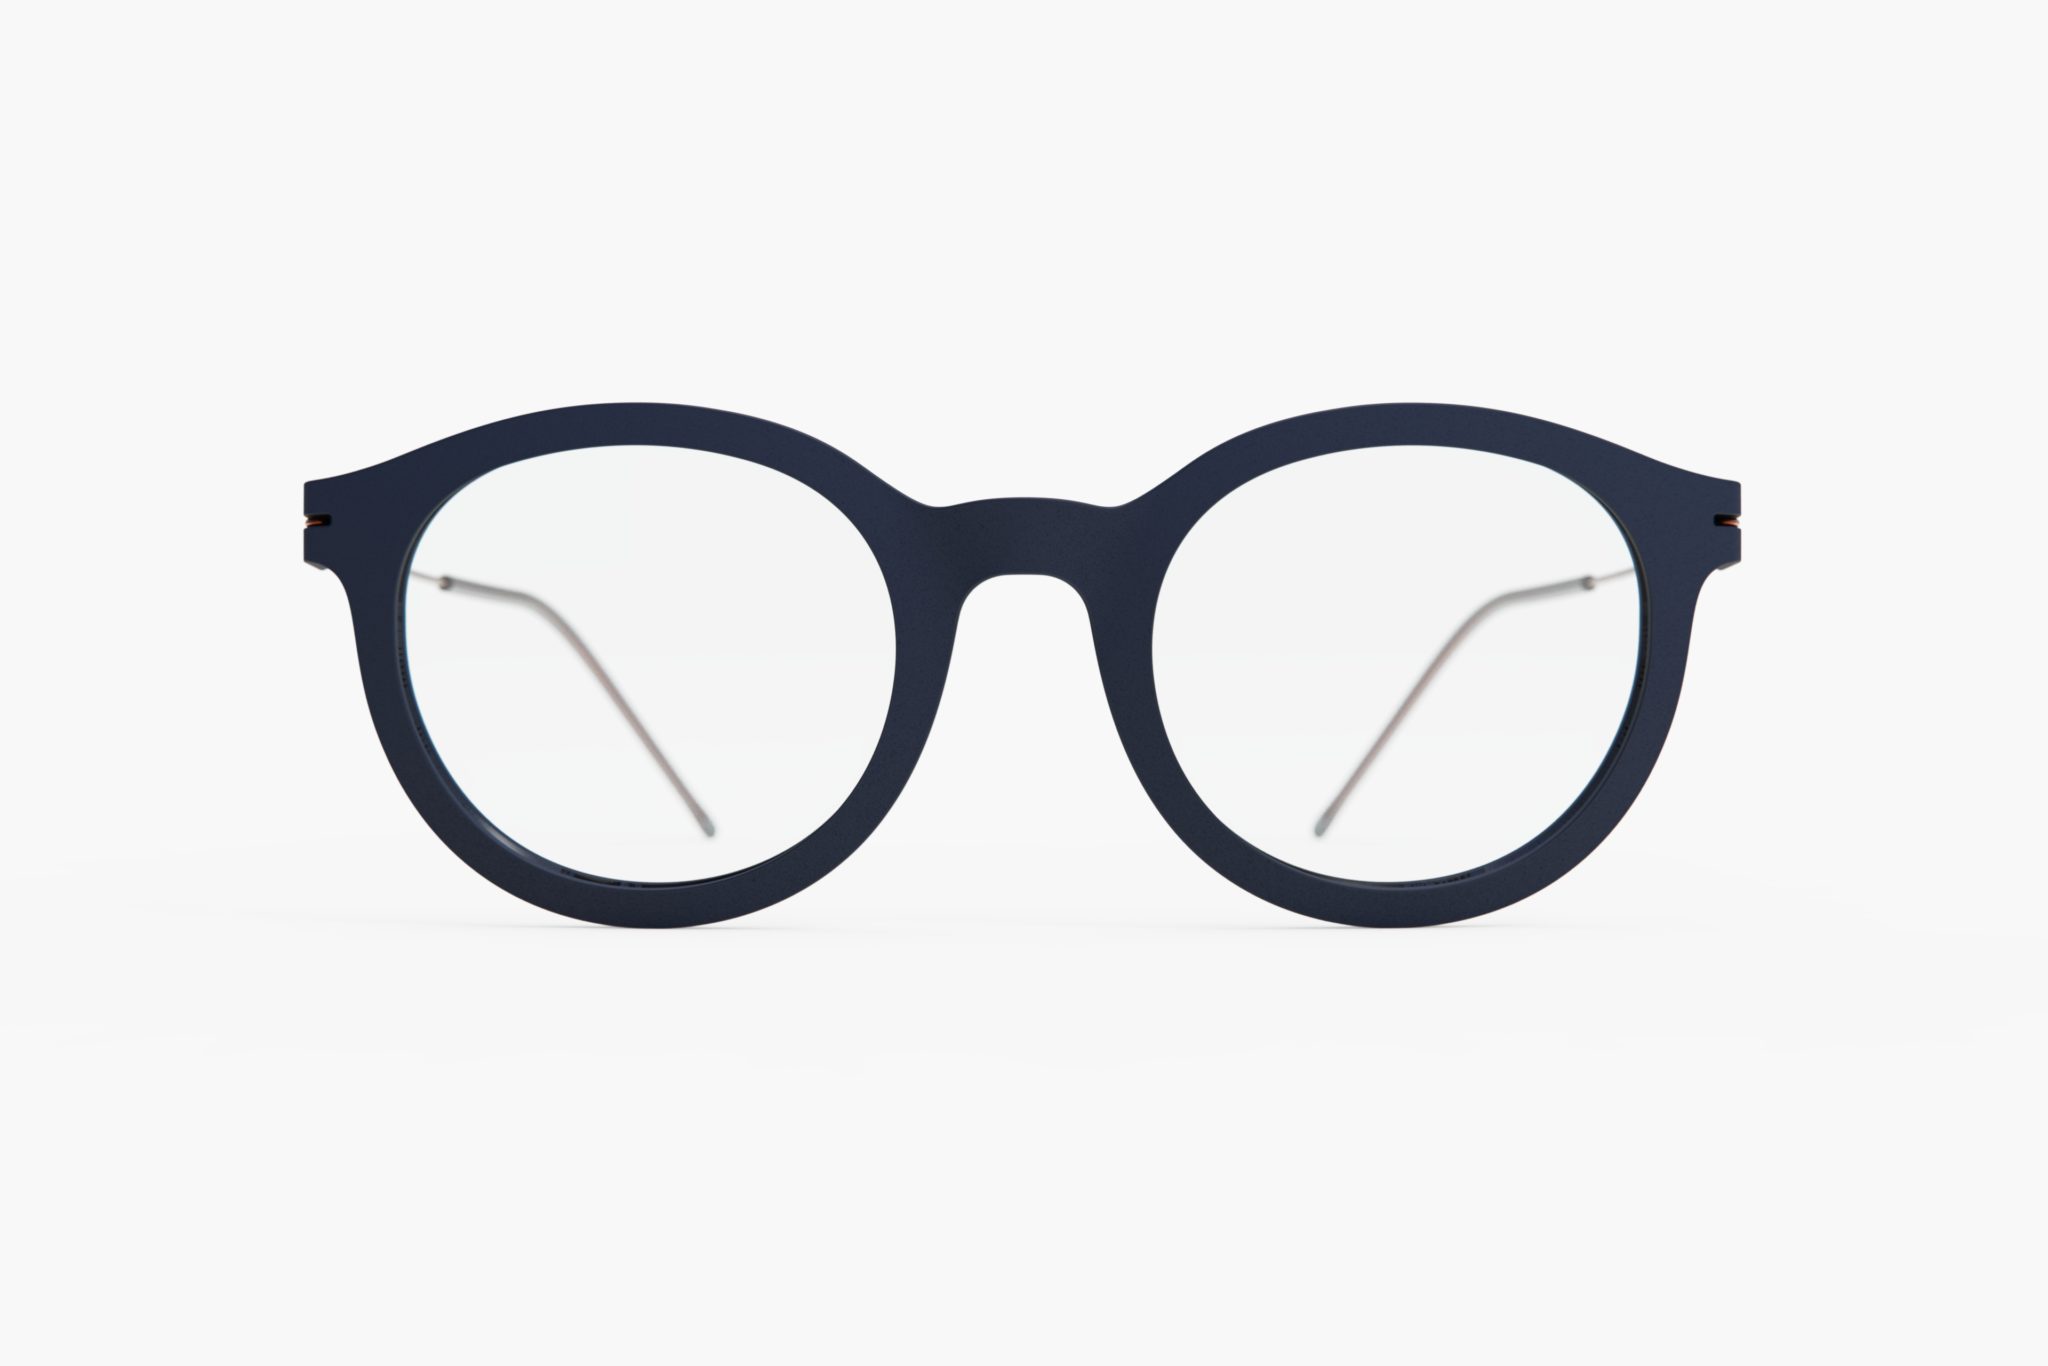 weareannu – Timeless eyewear manufactured intelligently